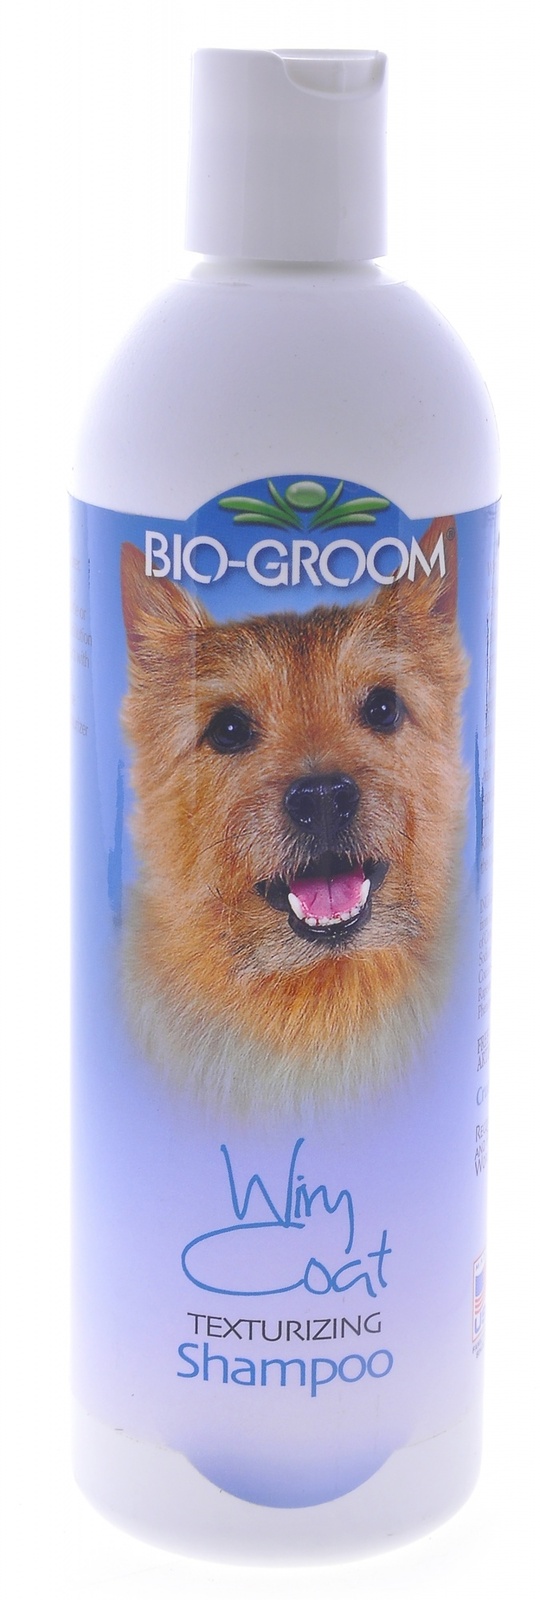 Biogroom Biogroom шампунь для жесткой шерсти, концентрат 1:4, 1.8 литра готового шампуня (355 г) biogroom biogroom шампунь без смывания waterless bath 473 г